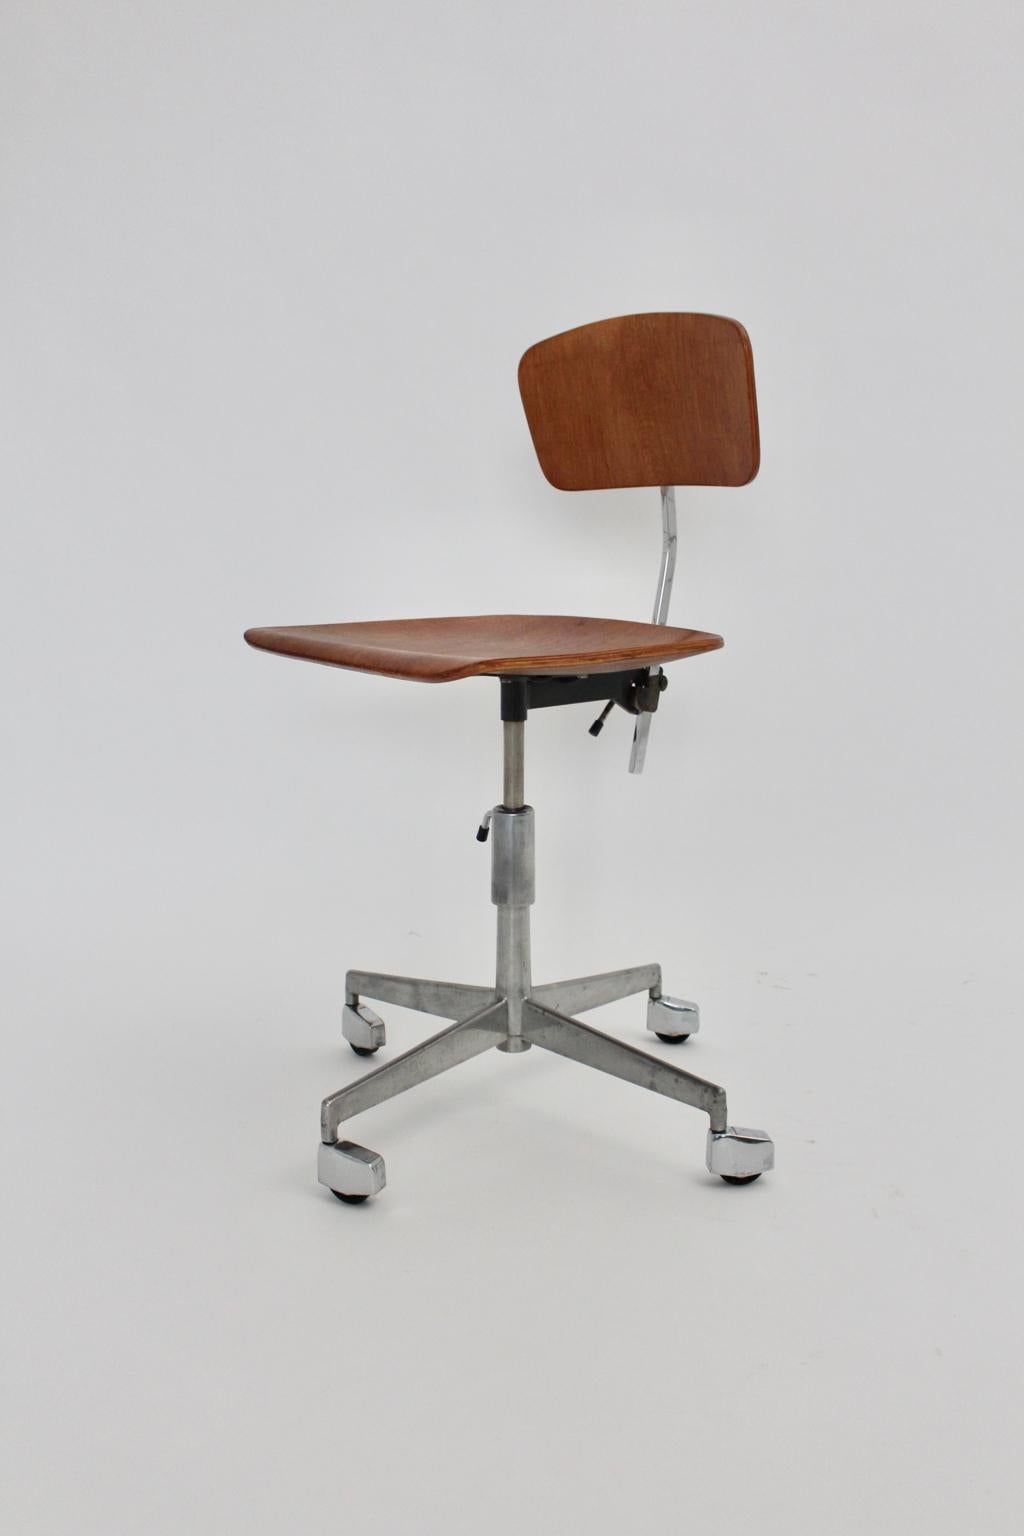 Metal Mid-Century Modern Vintage Brown Beech Desk Chair Jorgen Rasmussen 1950s Denmark For Sale